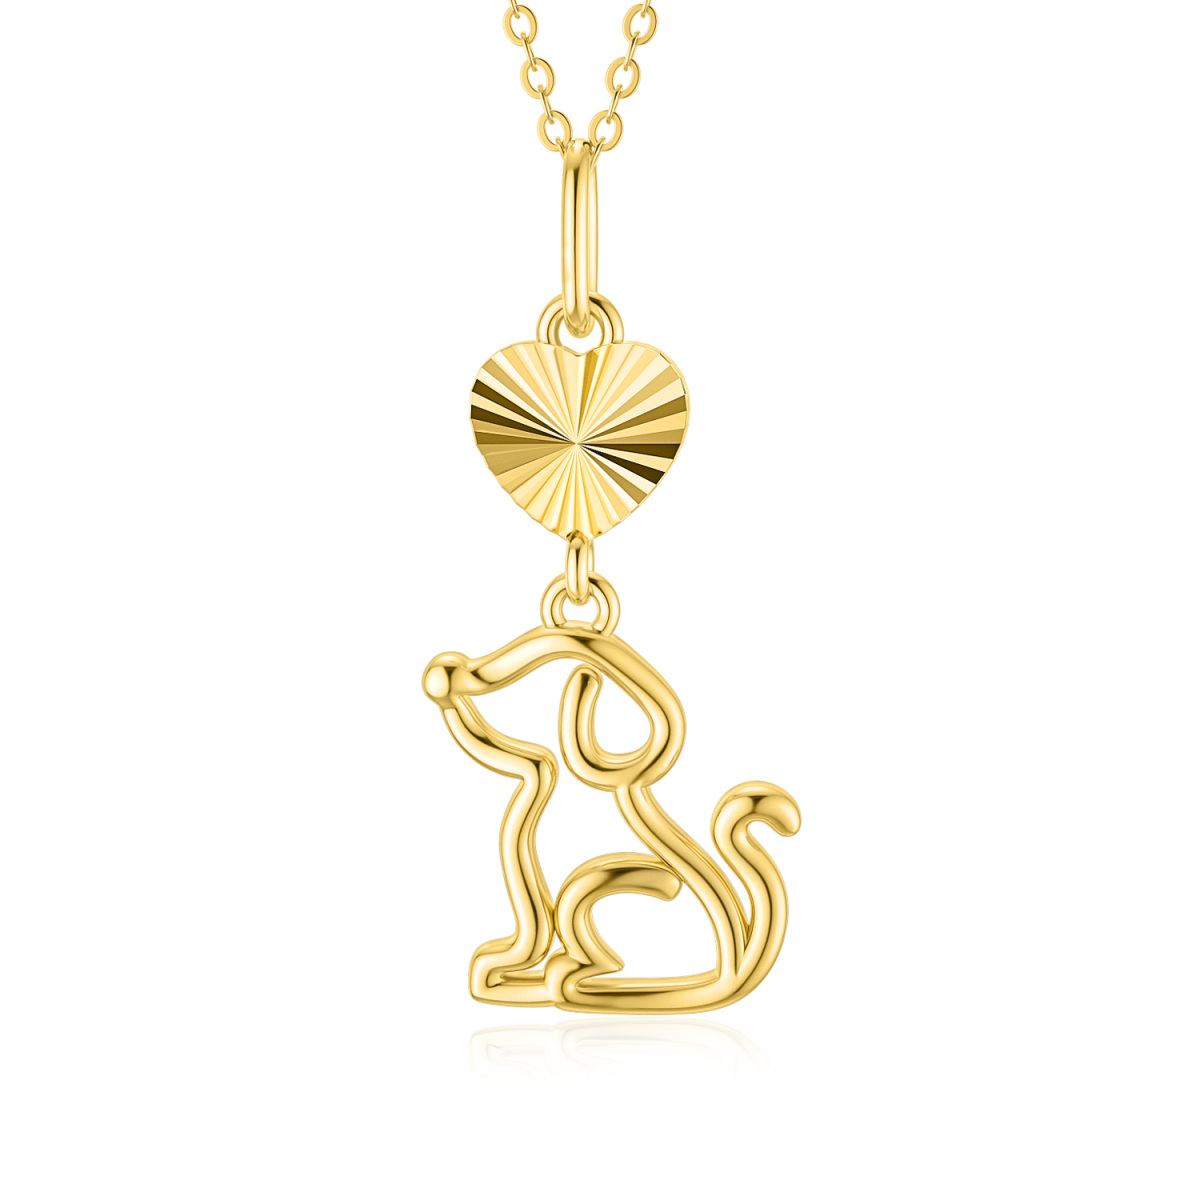 14K Gold Dog Pendant Necklace-1